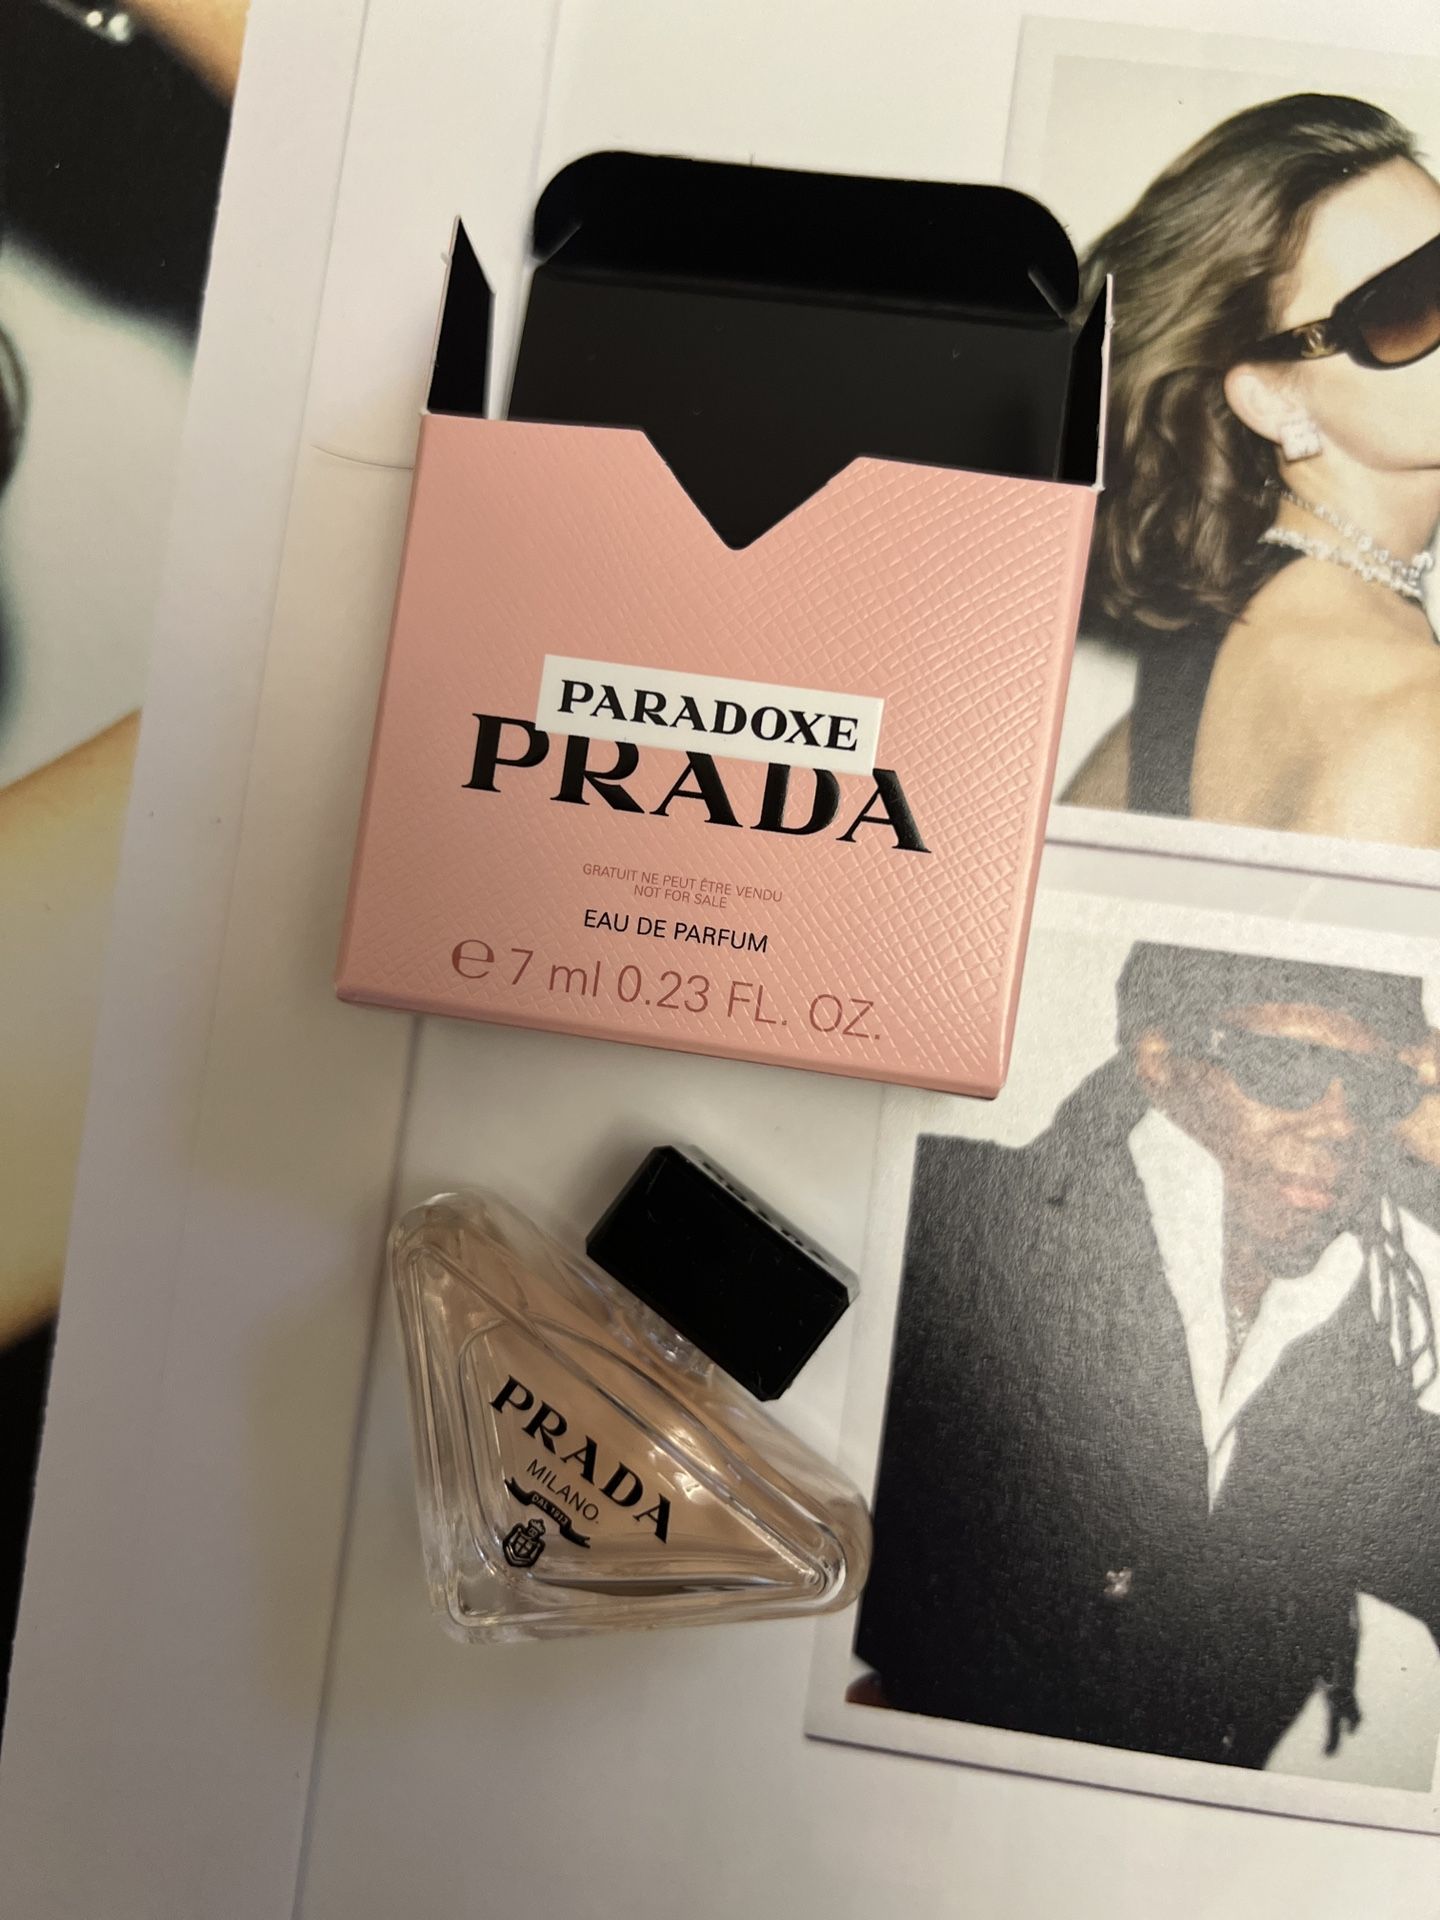 PRADA Paradoxe EDP Eau de Parfum Splash Dabber 0.23 fl oz 7 mL Mini Perfume NIB.